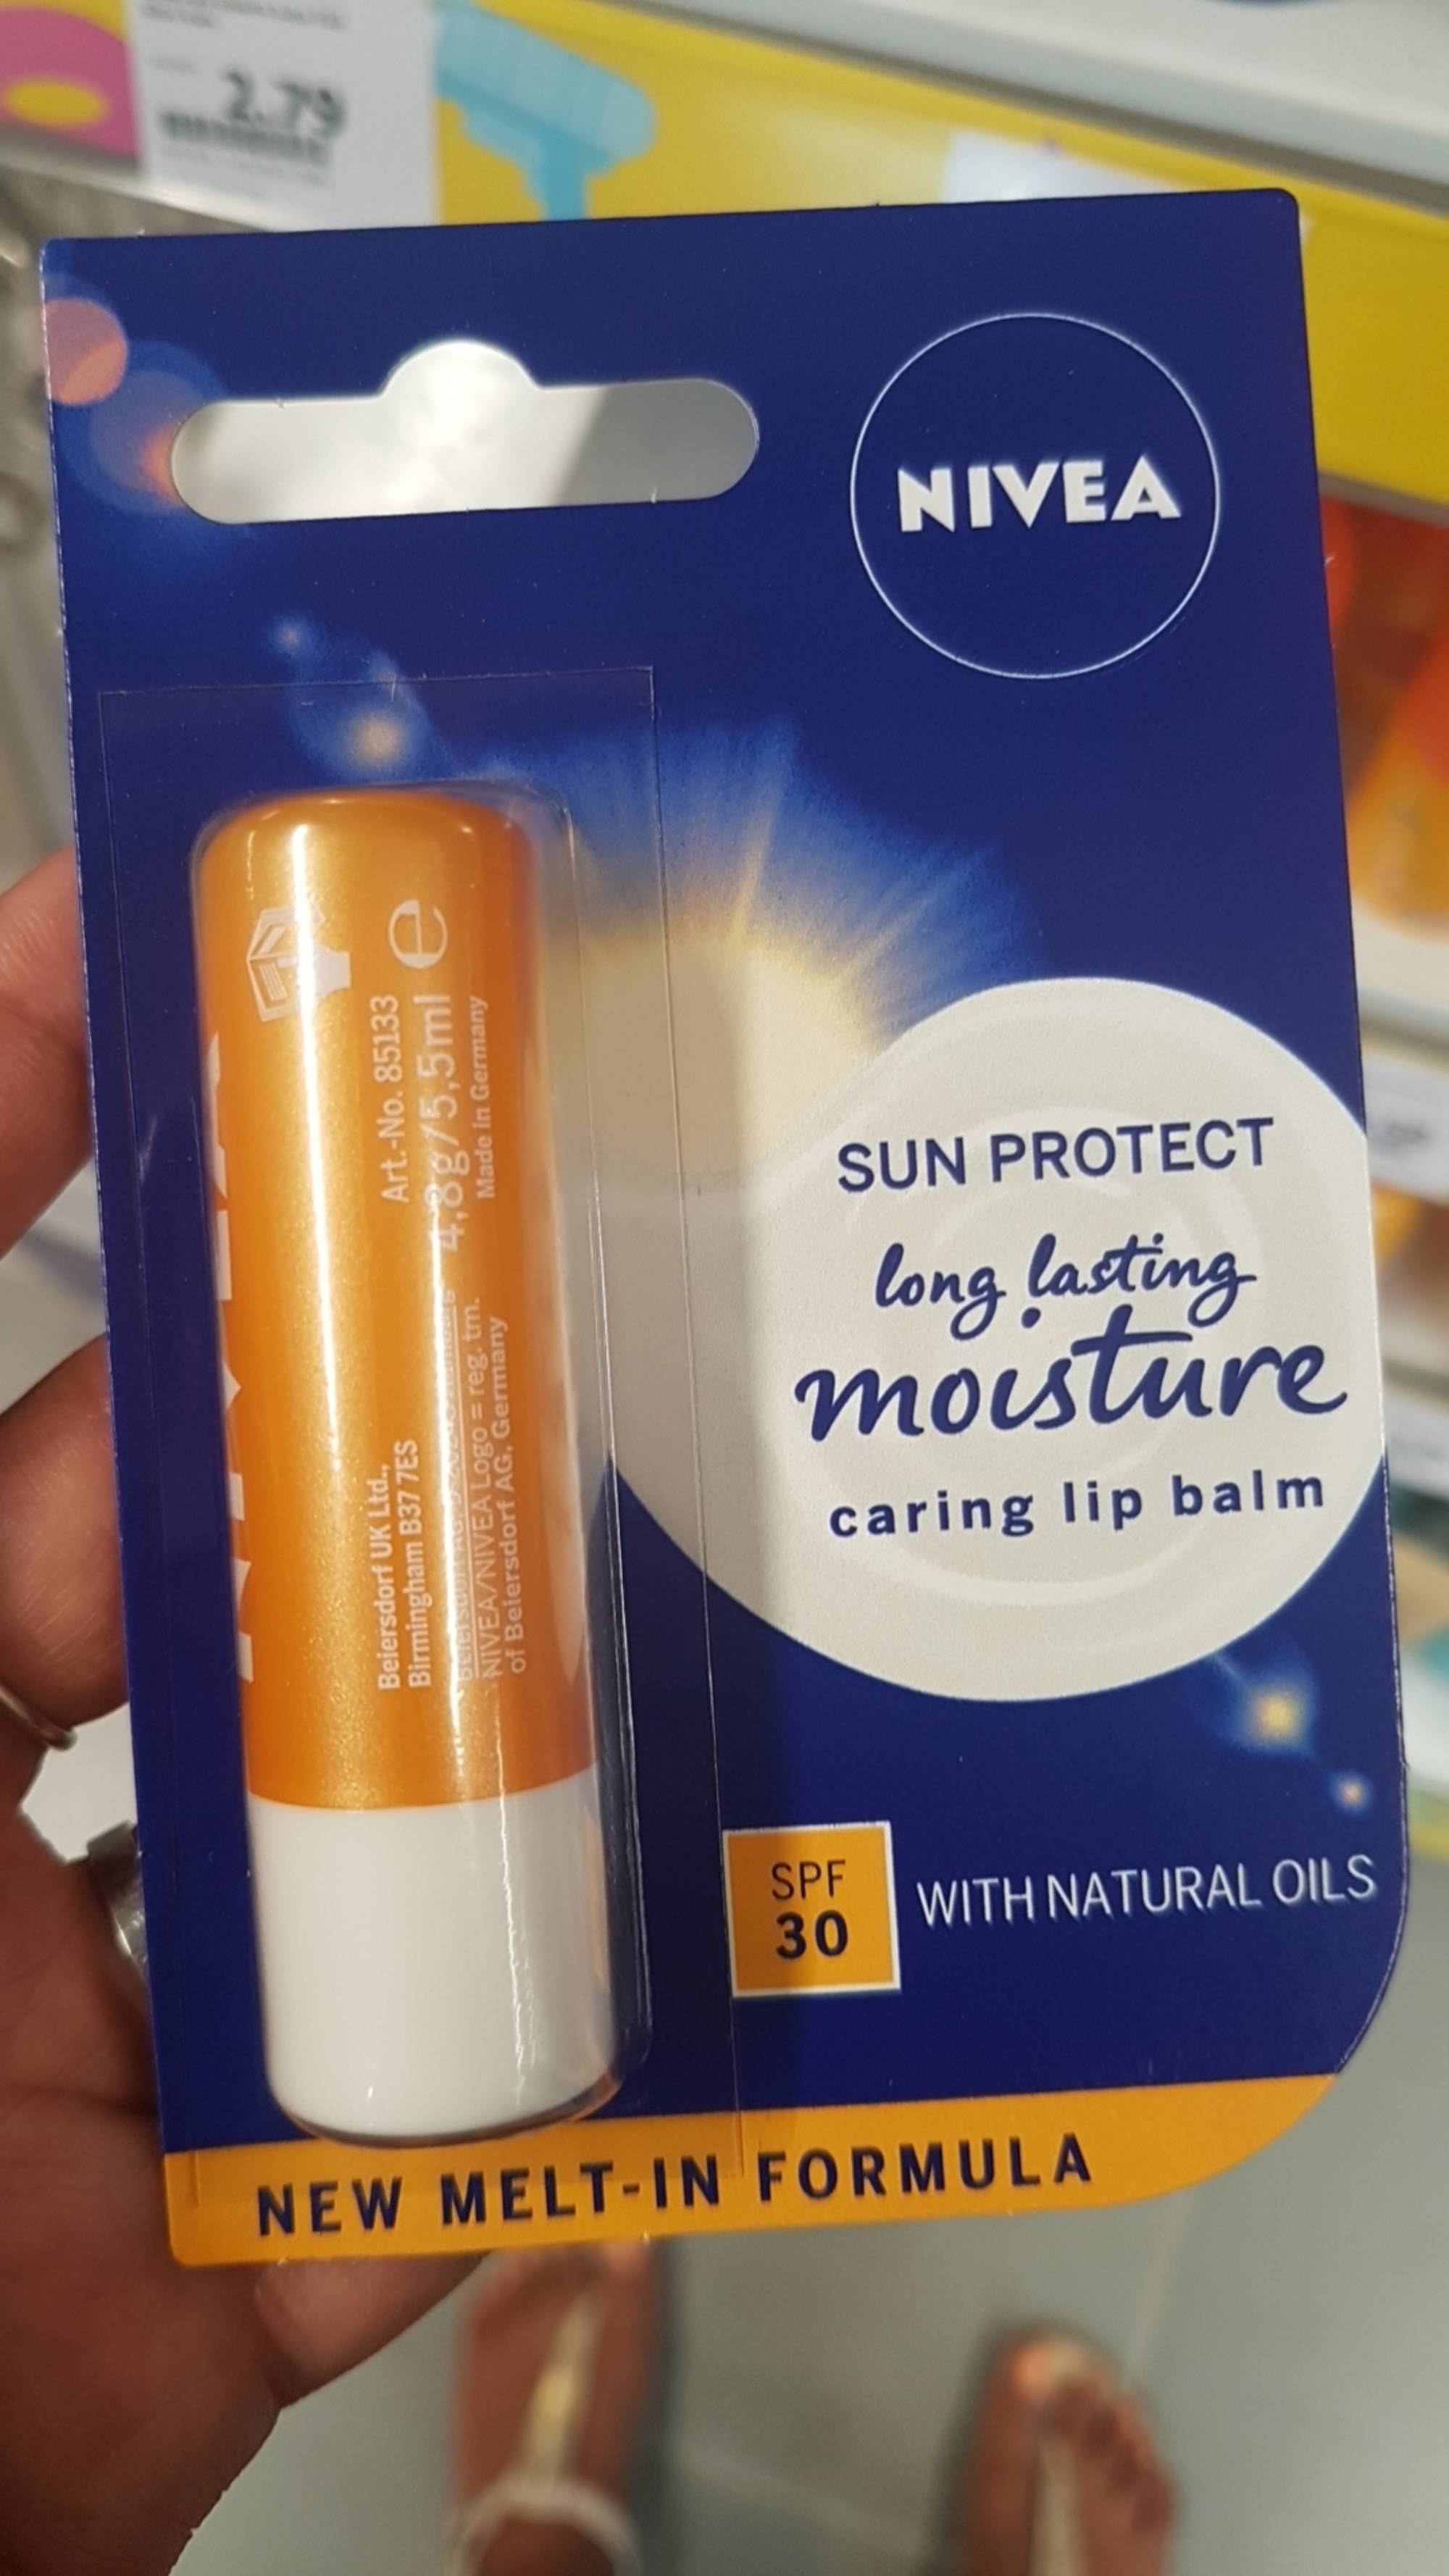 NIVEA - Sun protect - Caring lip balm moisture SPF 30